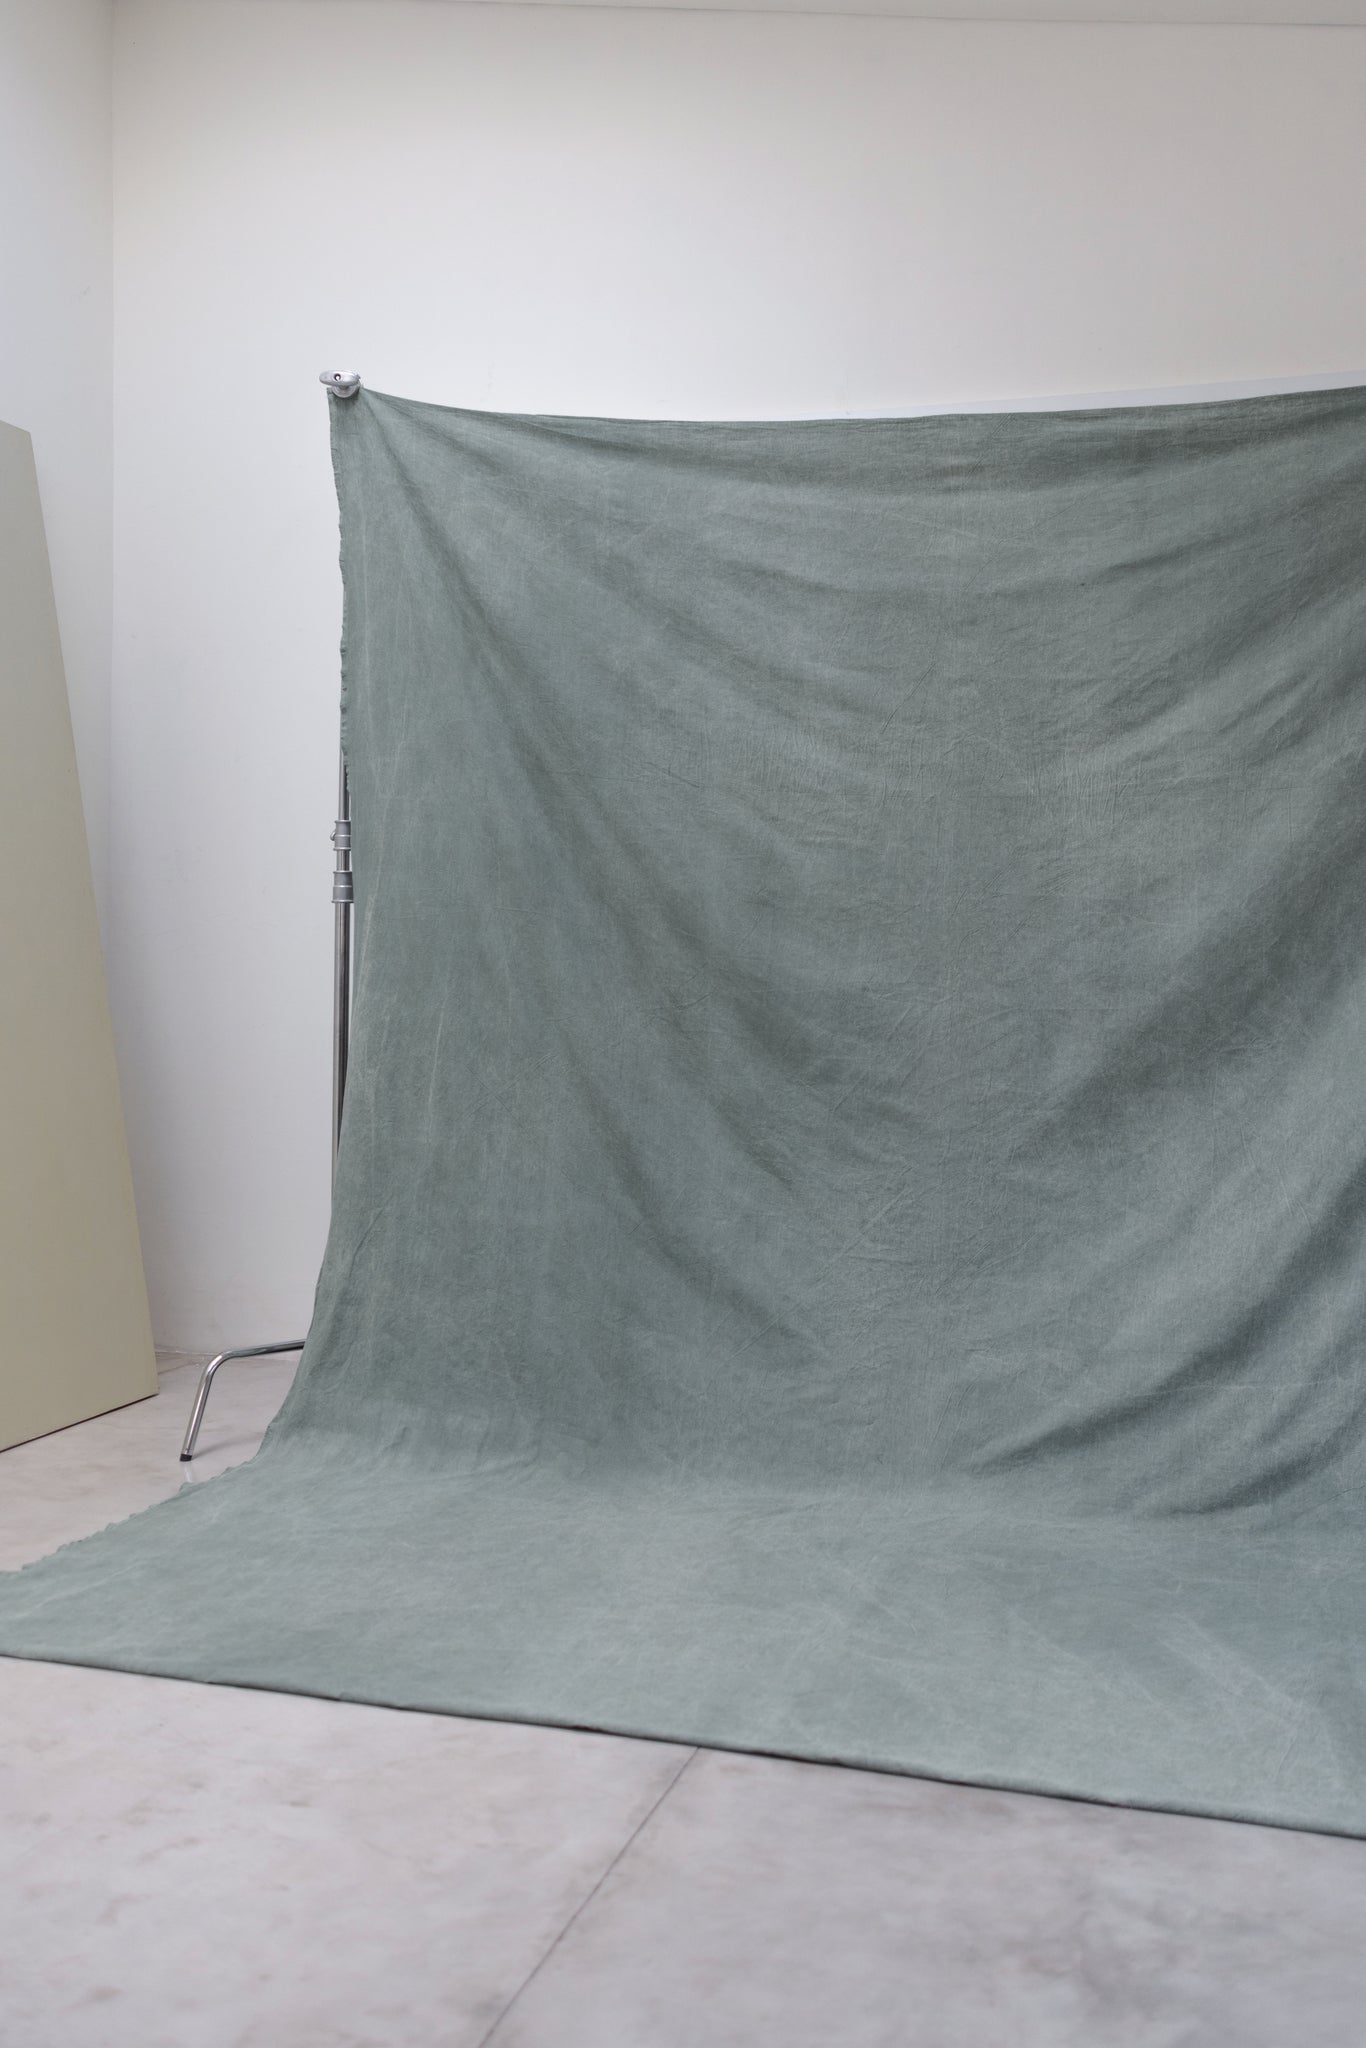 [3x6.25m] Canvas Backdrop Light Teal